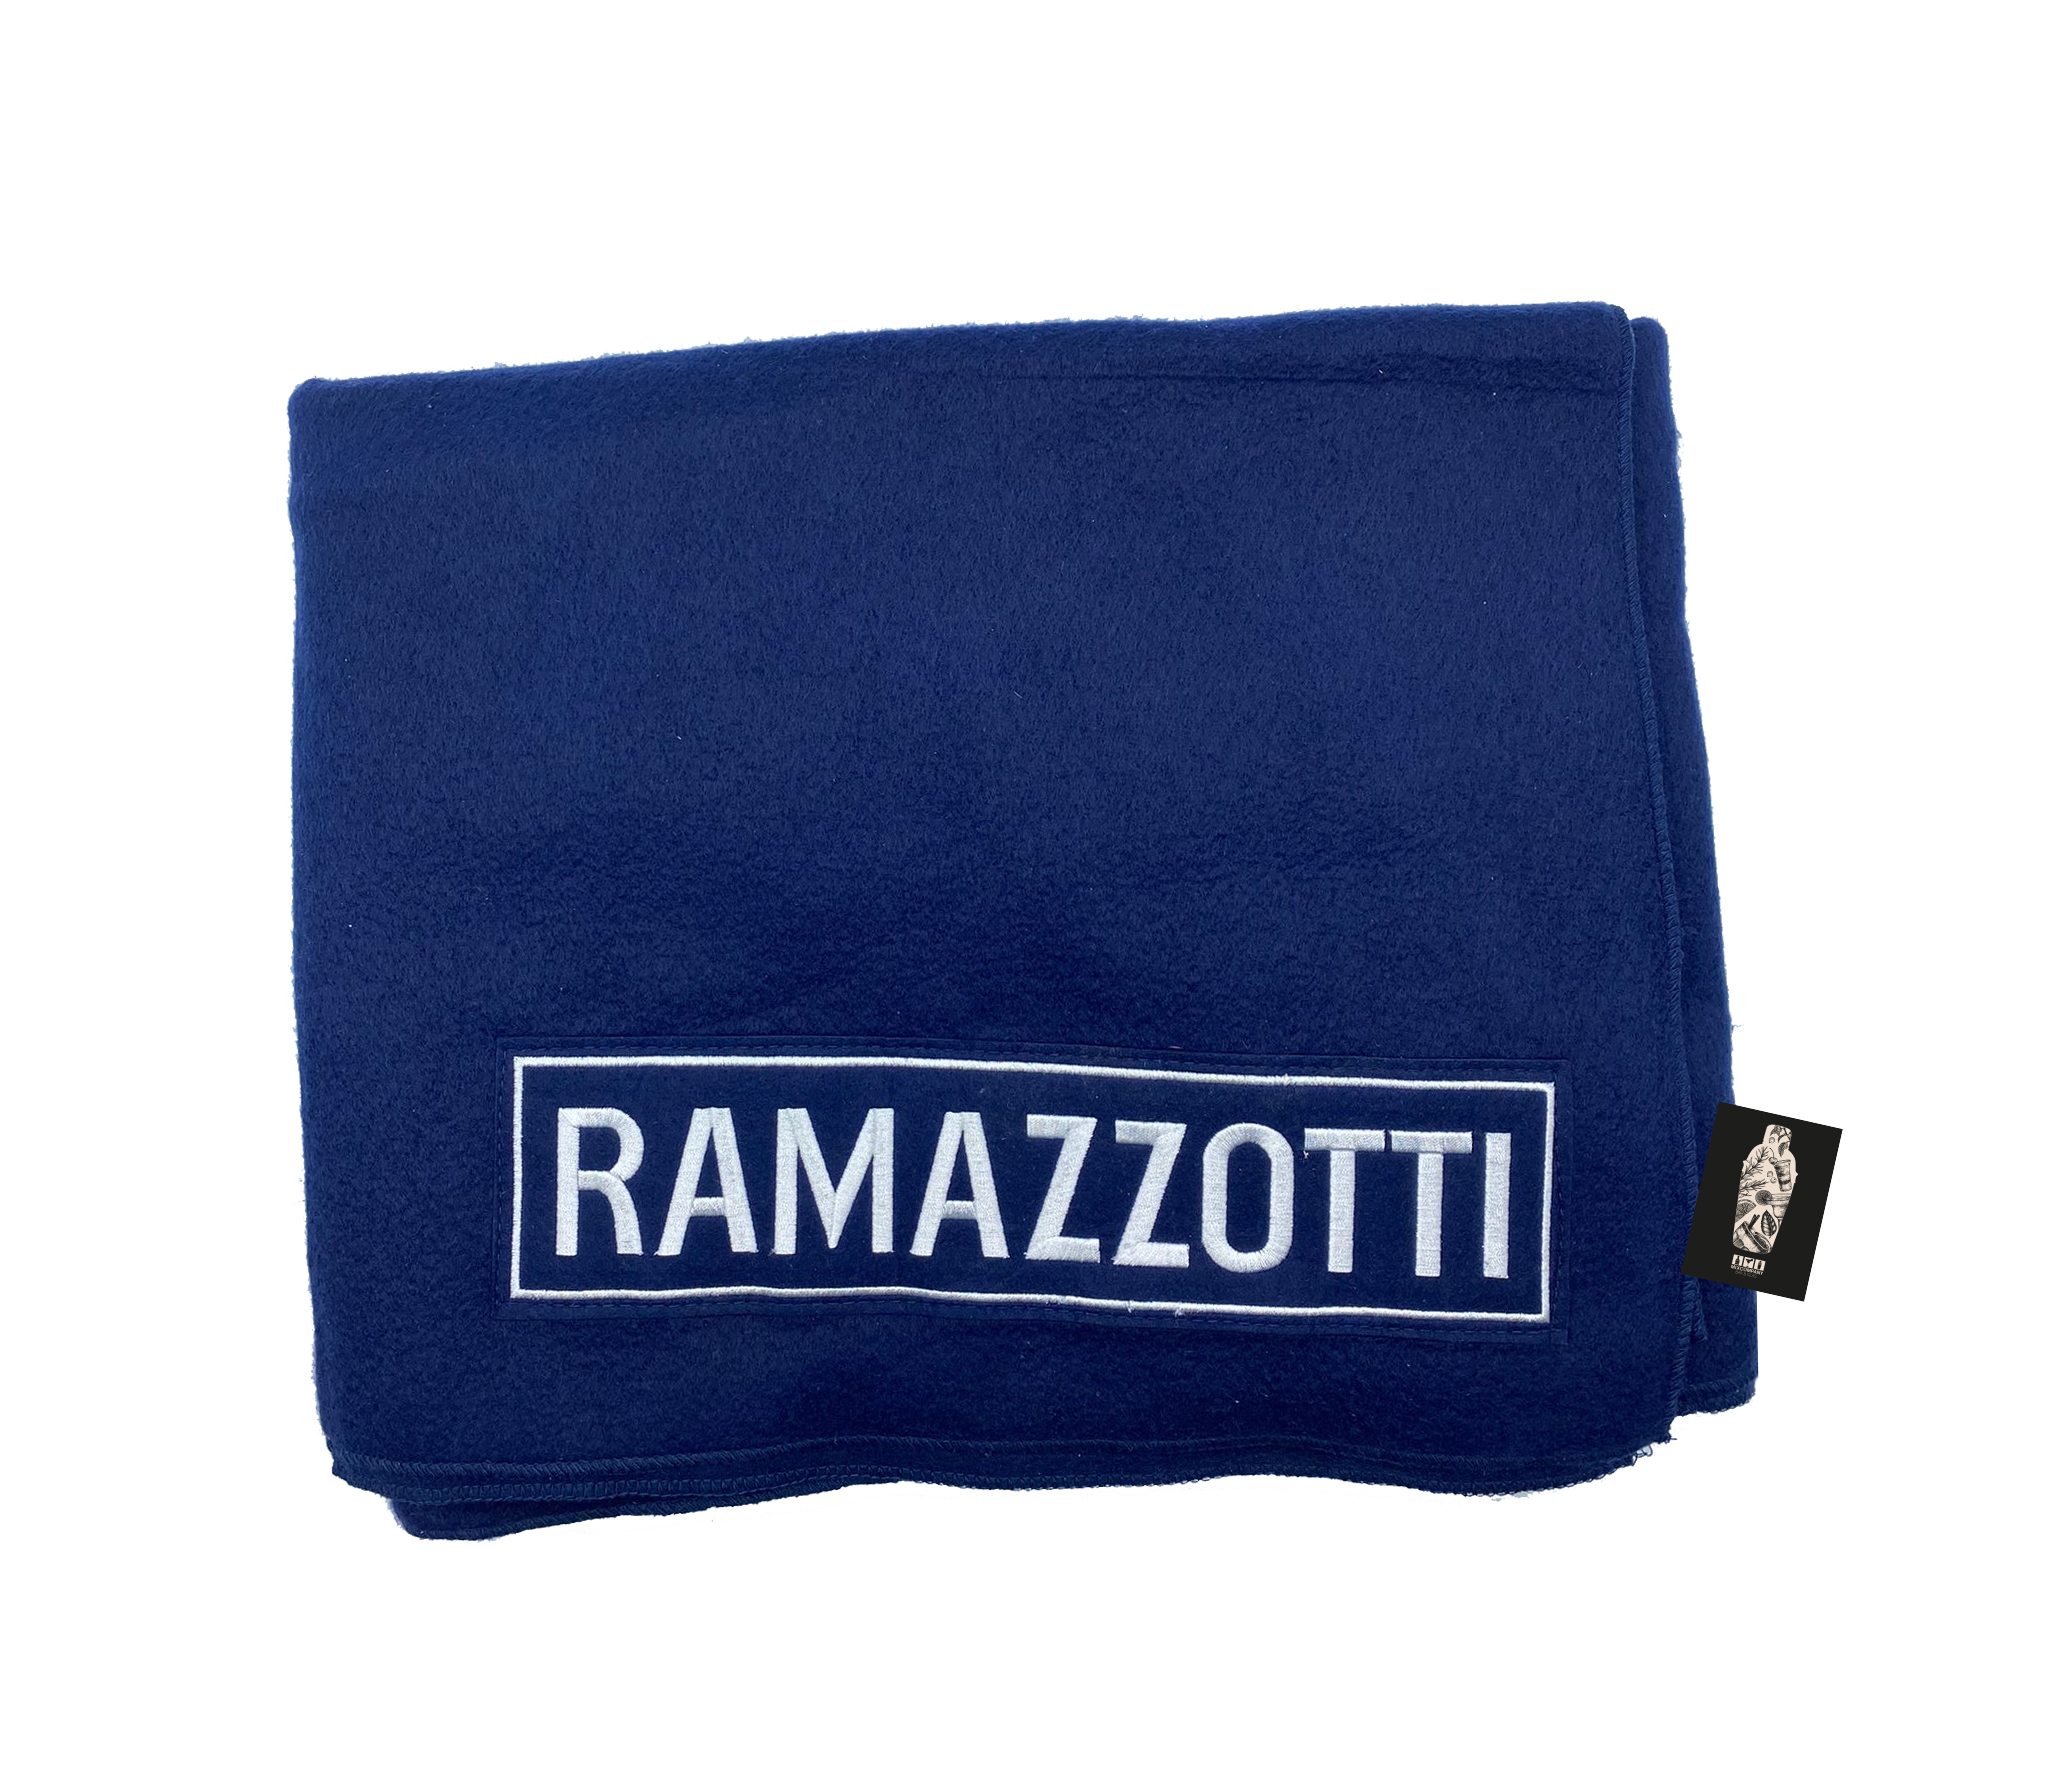 Ramazzotti Decke Gastro 100% Polyester Maße: ca. 150x120cm Farbe: Dunkelblau inkl. Mixcompany Postkarte